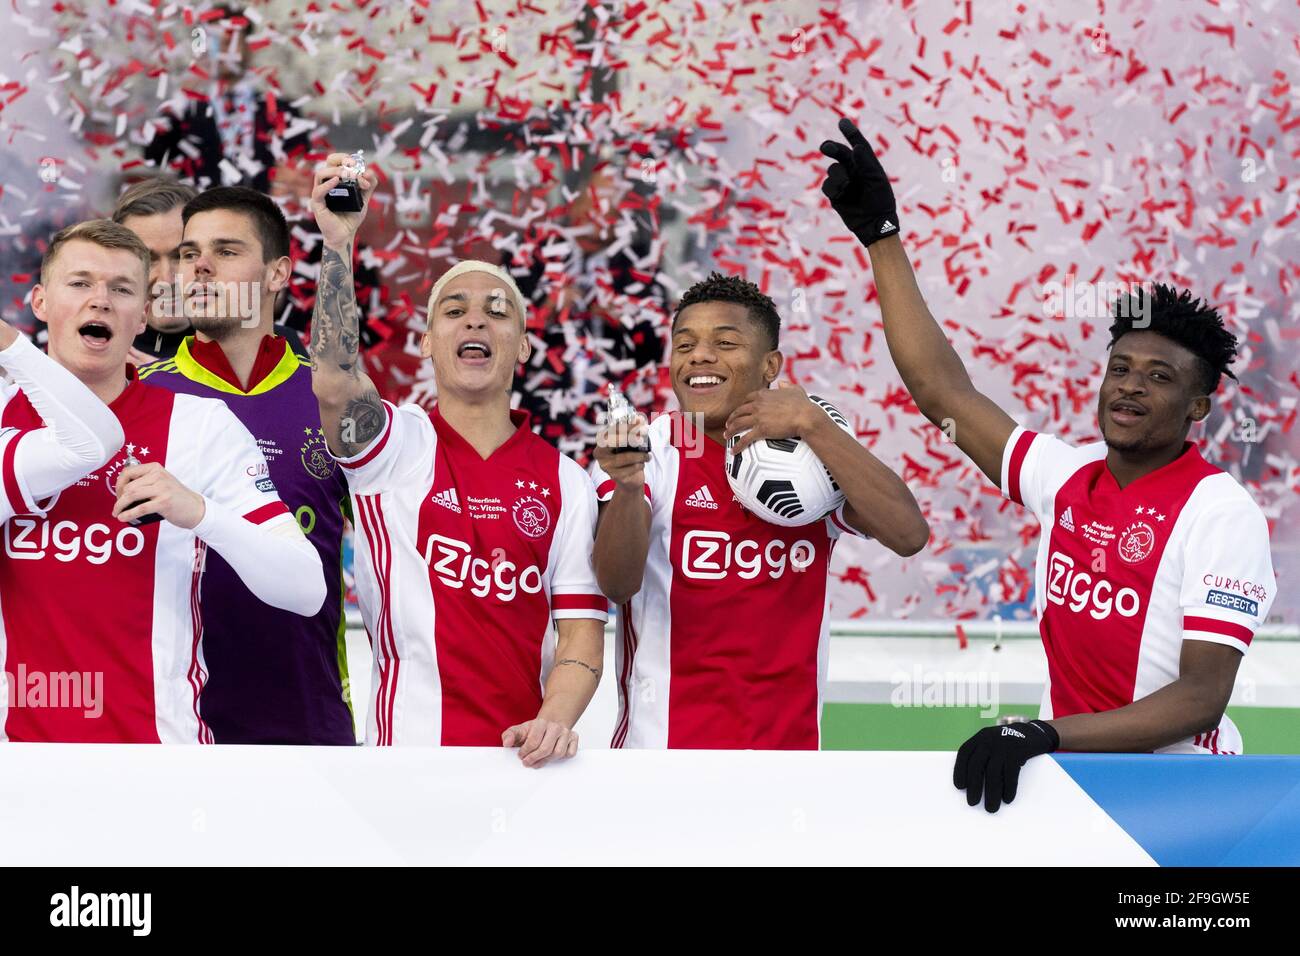 ROTTERDAM, 18-04-2021, Stadium de Kuip, Dutch football, season 2020 / 2021,  Cupfinal for the KNVB-beker between Ajax and Vitesse., Ajax celebrating the  cup victory , Ajax player Antony Ajax player David Neres